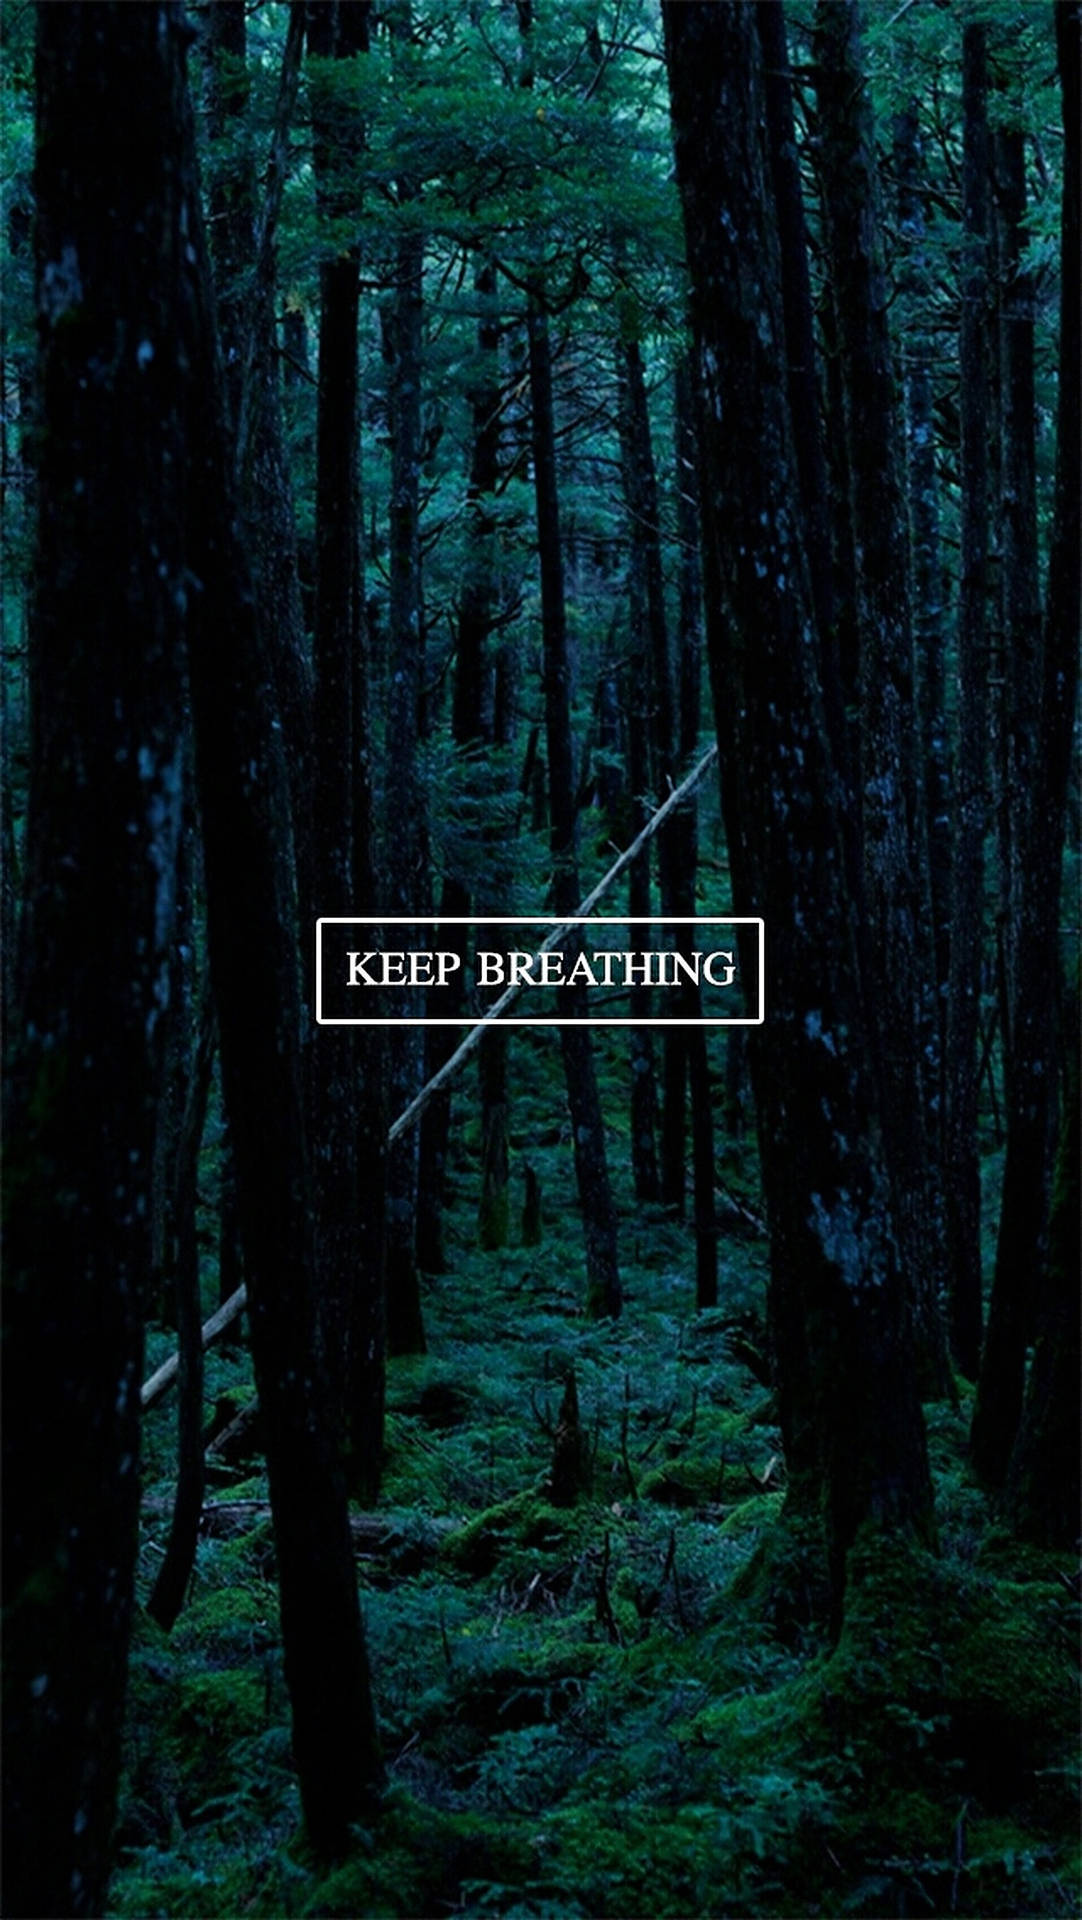 Download Keep Breathing Dark Trees Wallpaper | Wallpapers.com